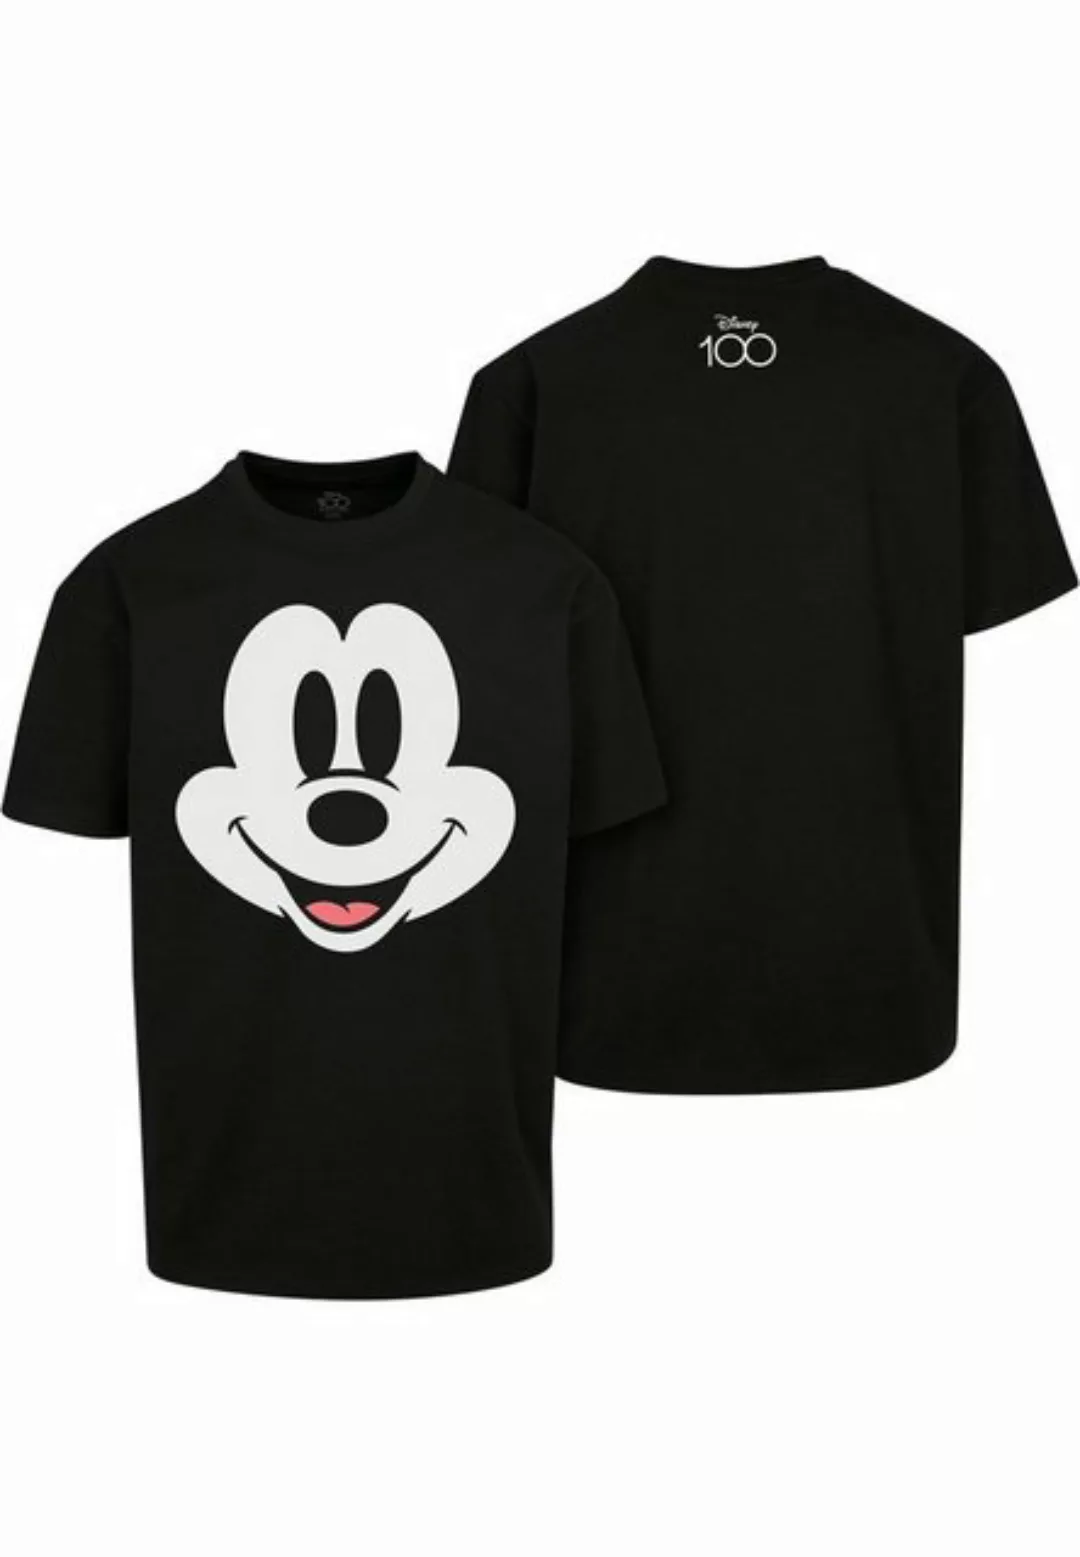 Upscale by Mister Tee T-Shirt Upscale by Mister Tee Unisex Disney 100 Micke günstig online kaufen